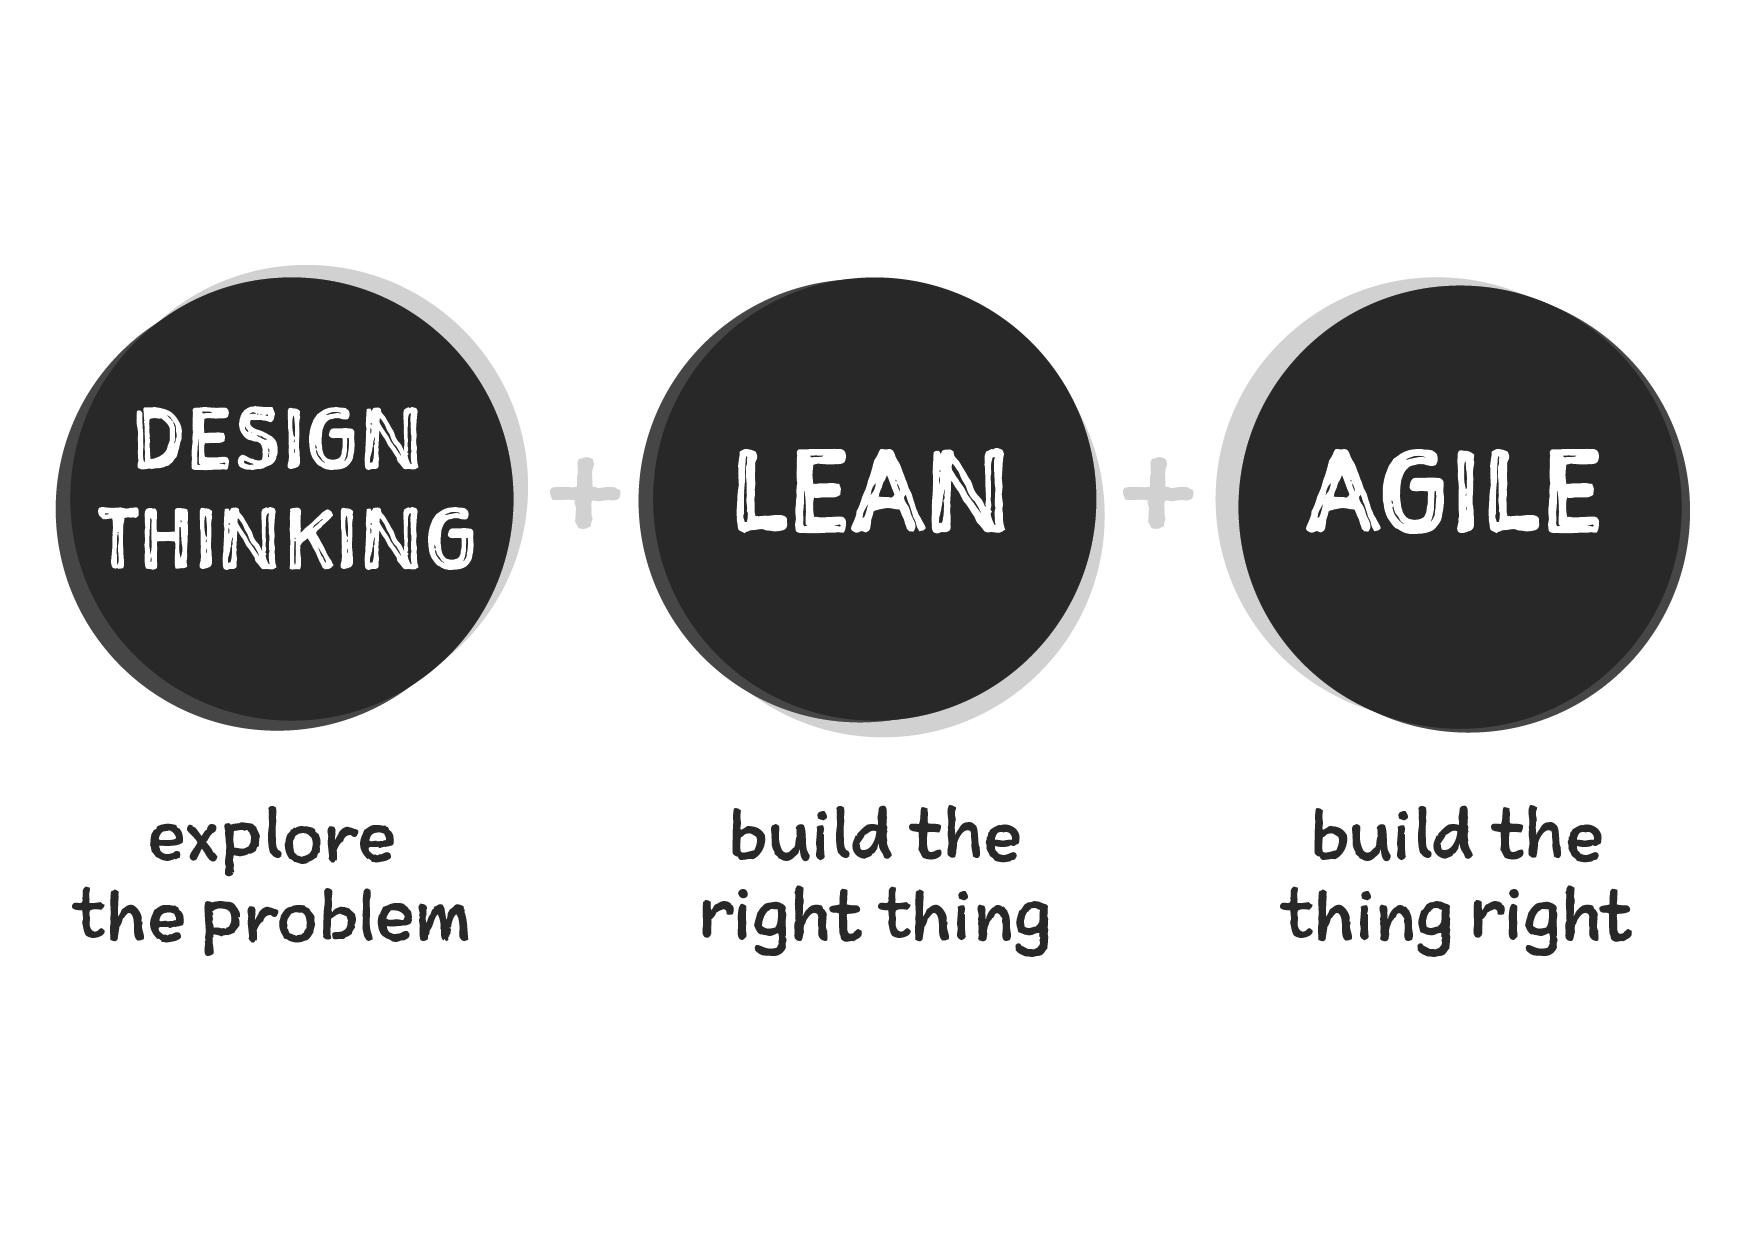 Design thinking, Lean, and Agile